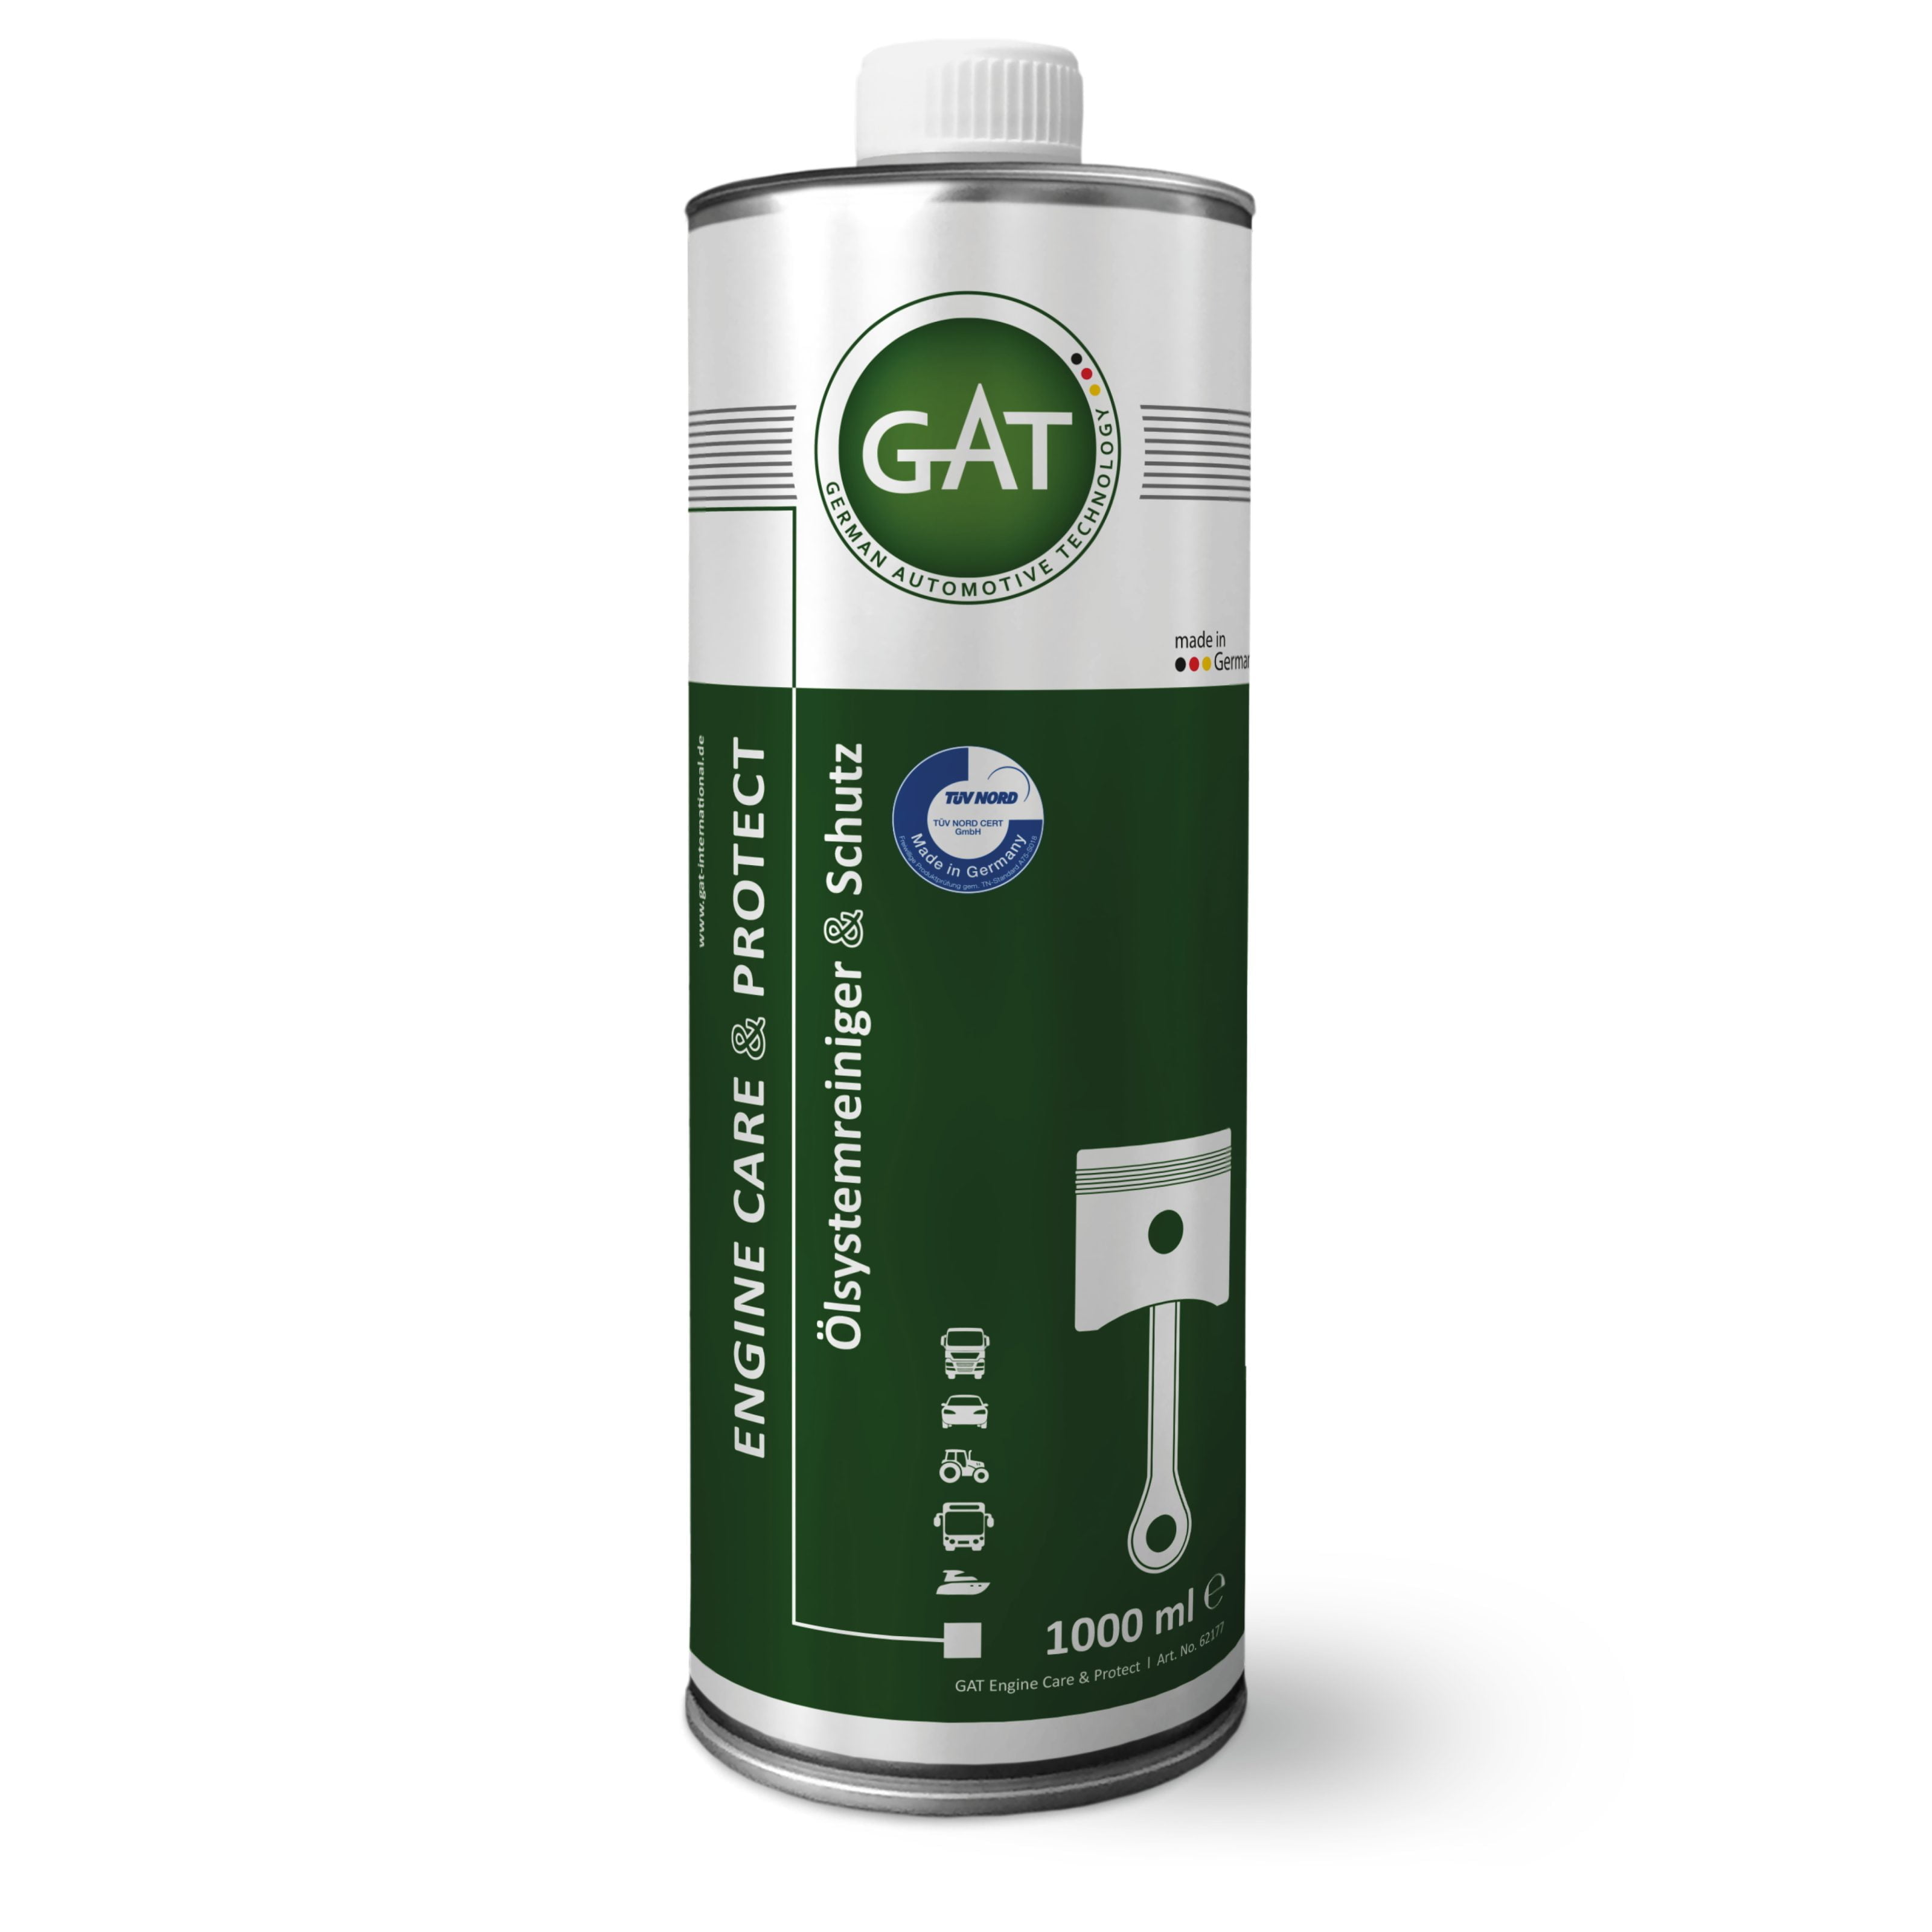 5in1 Katalysator Reiniger / Cat Clean 310ml